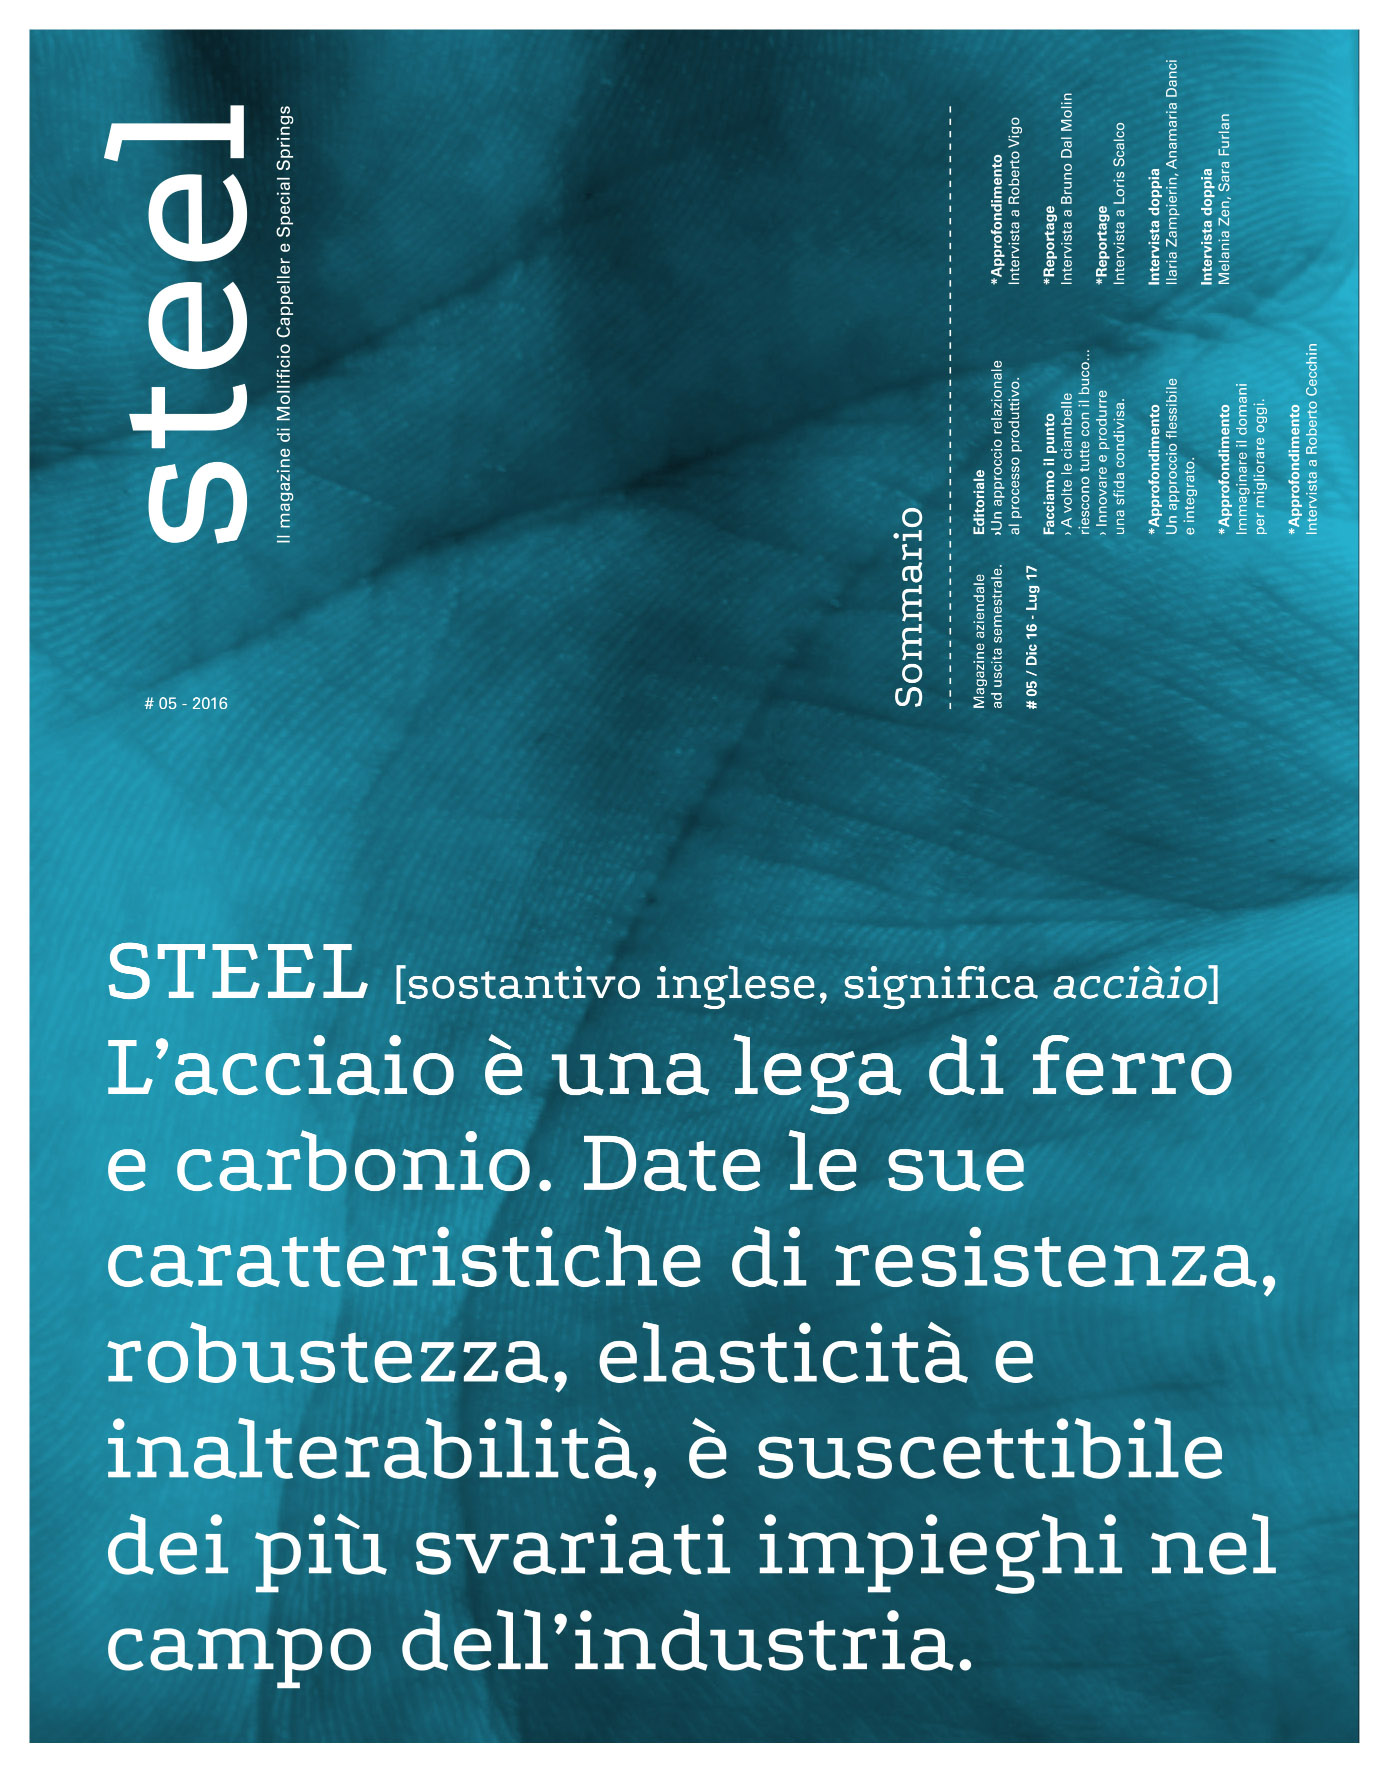 steel-04-20pagine.indd